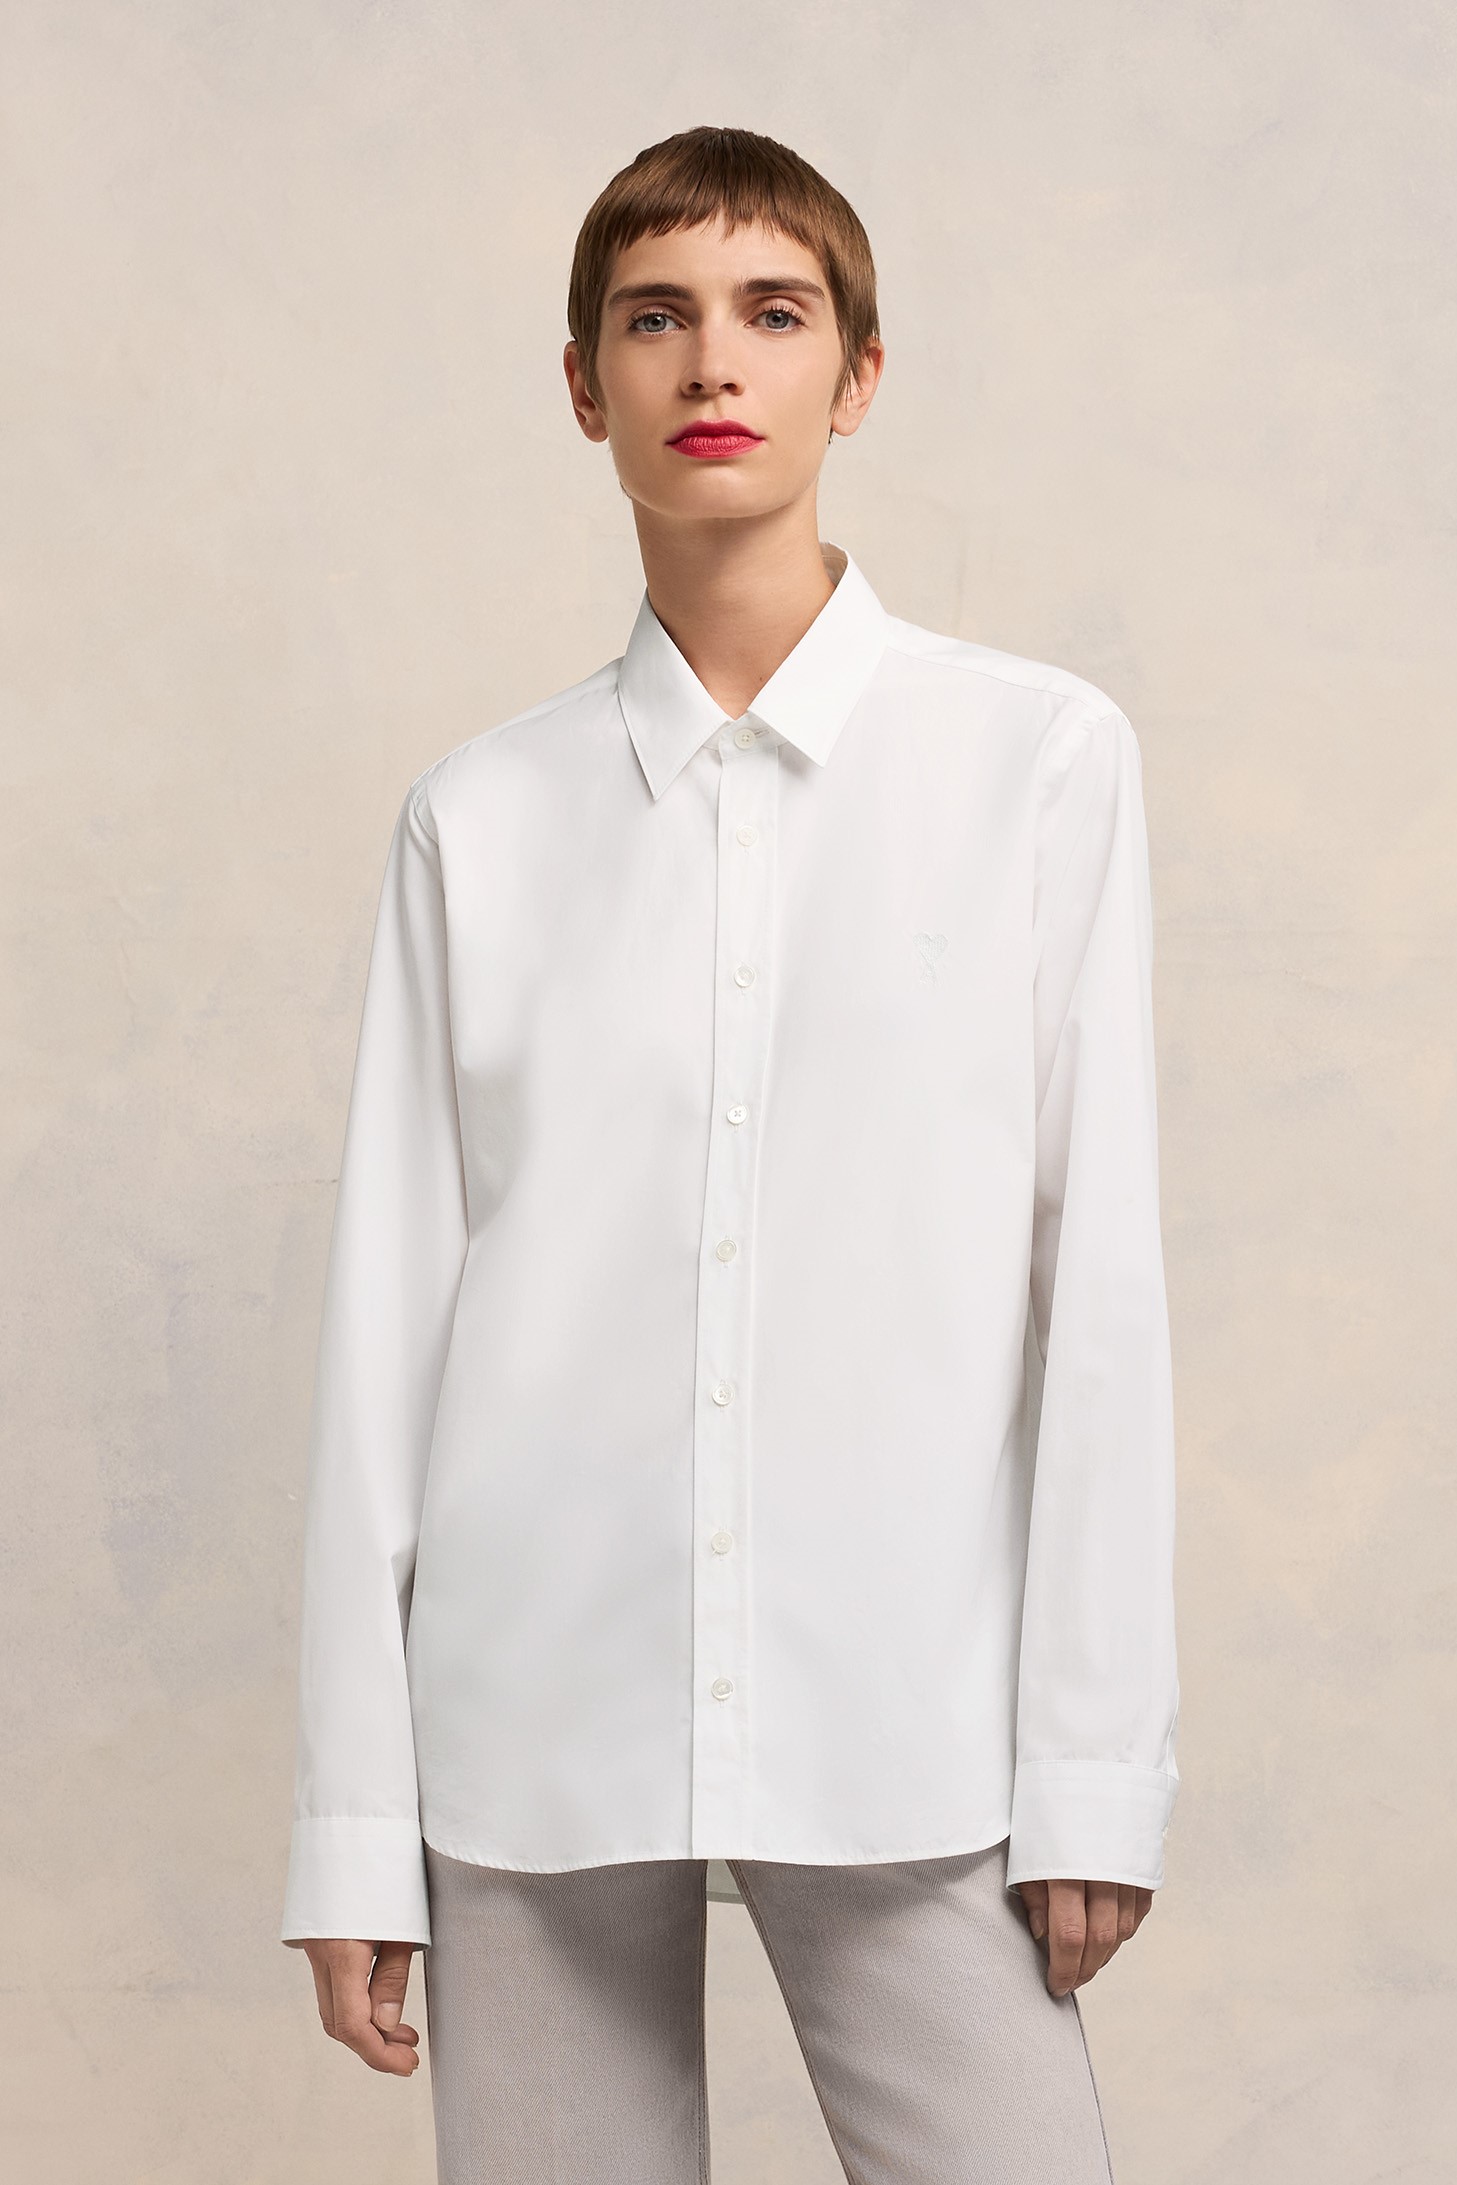 AMI PARIS de Coeur Classic Shirt in White S